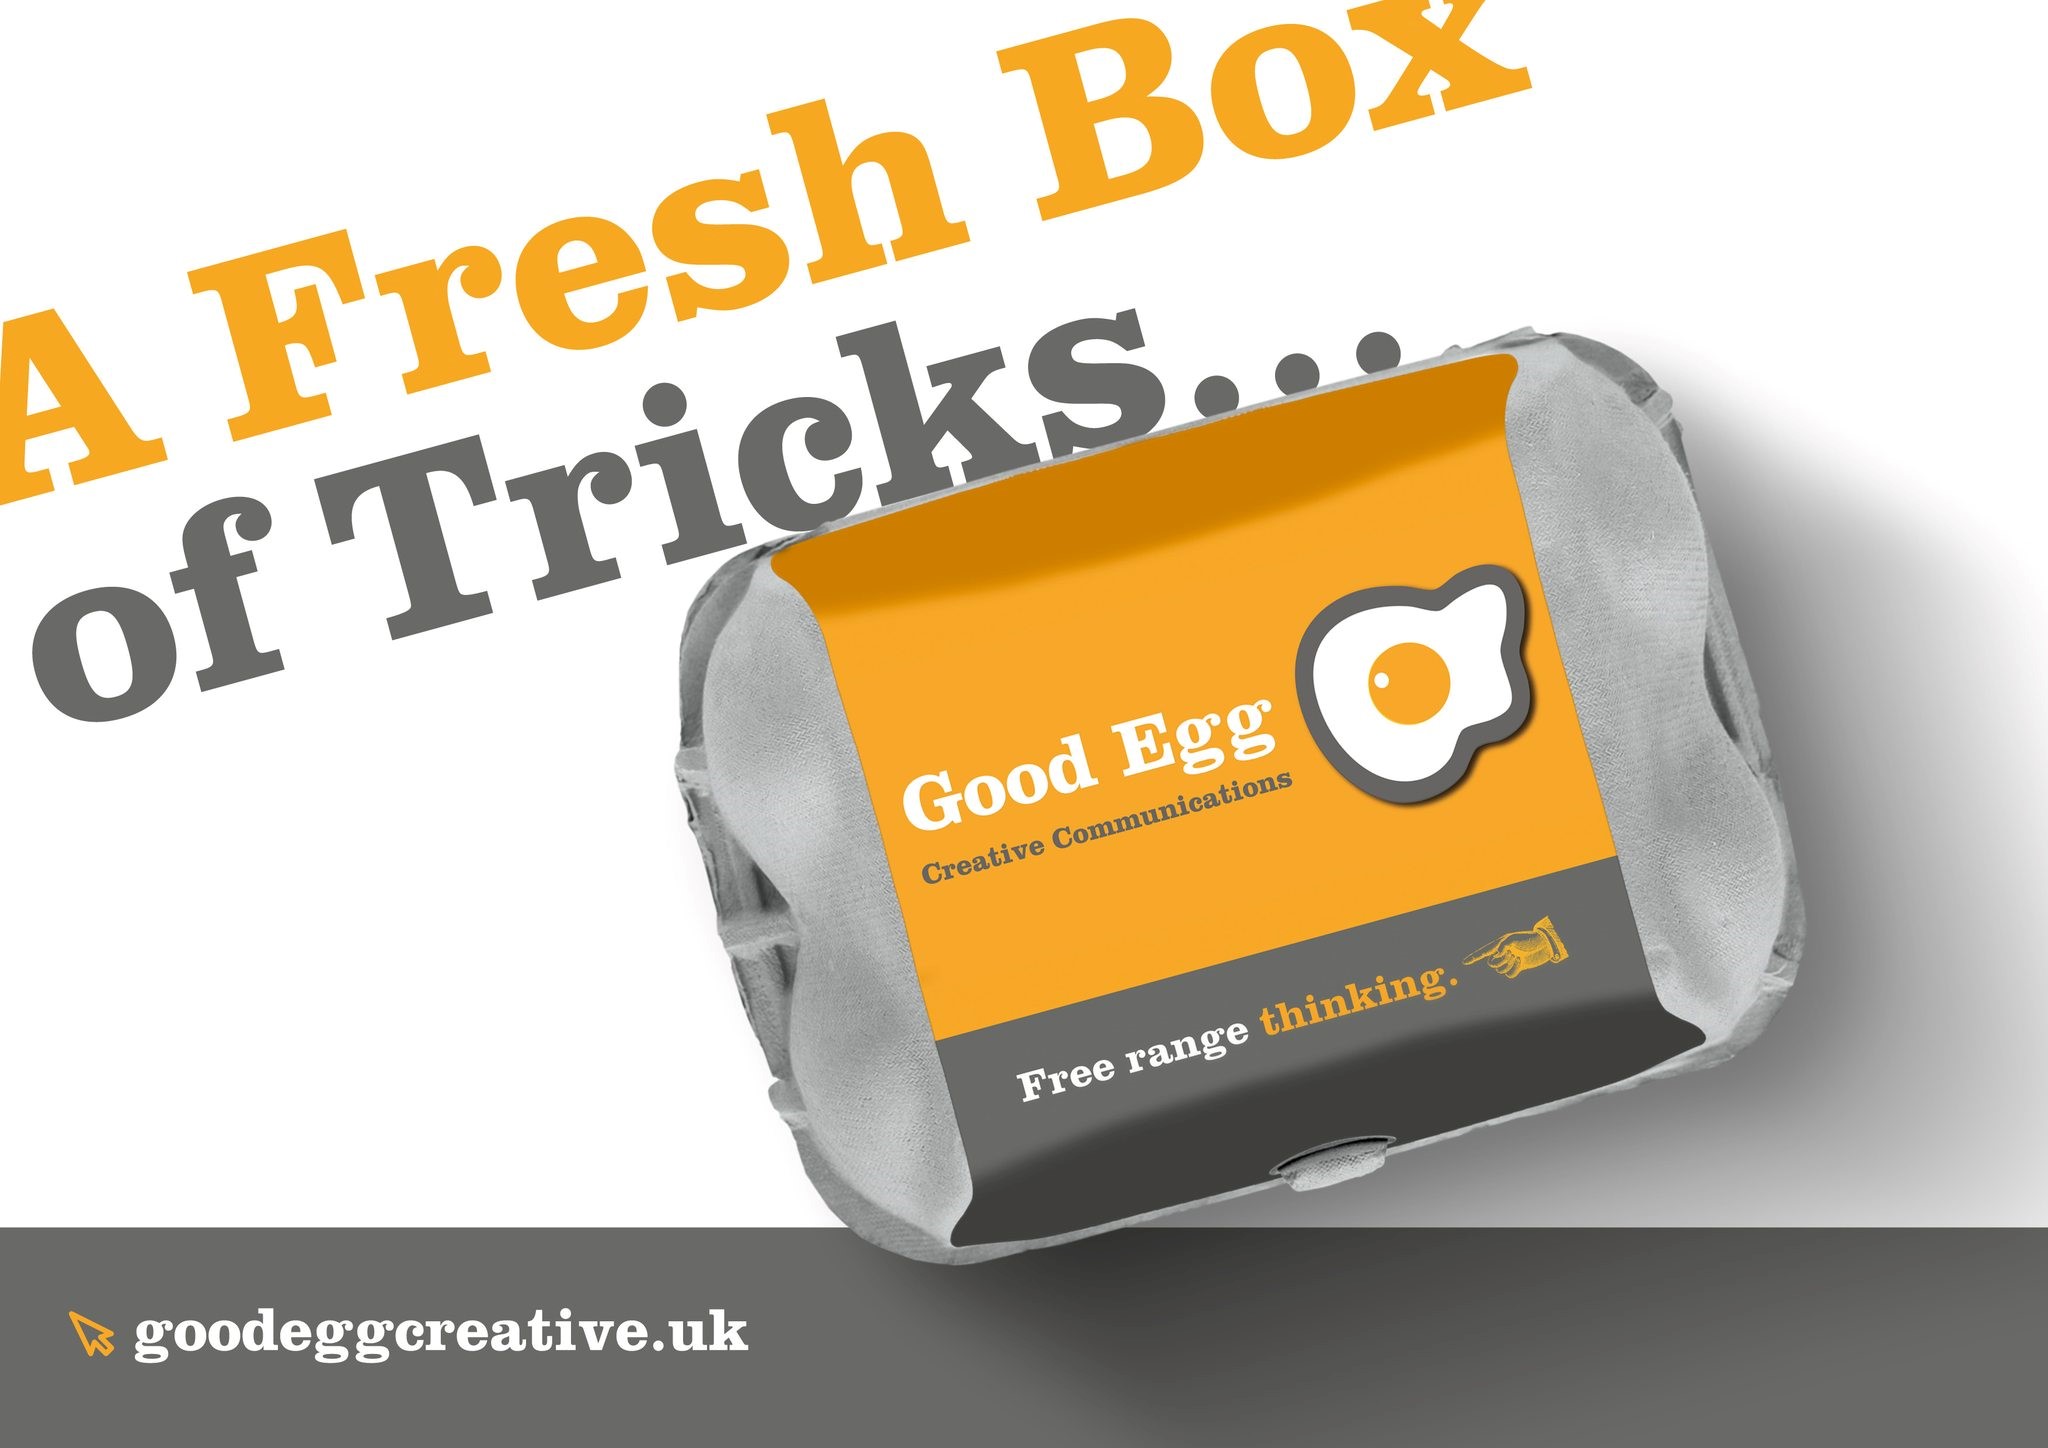 Good Egg Box